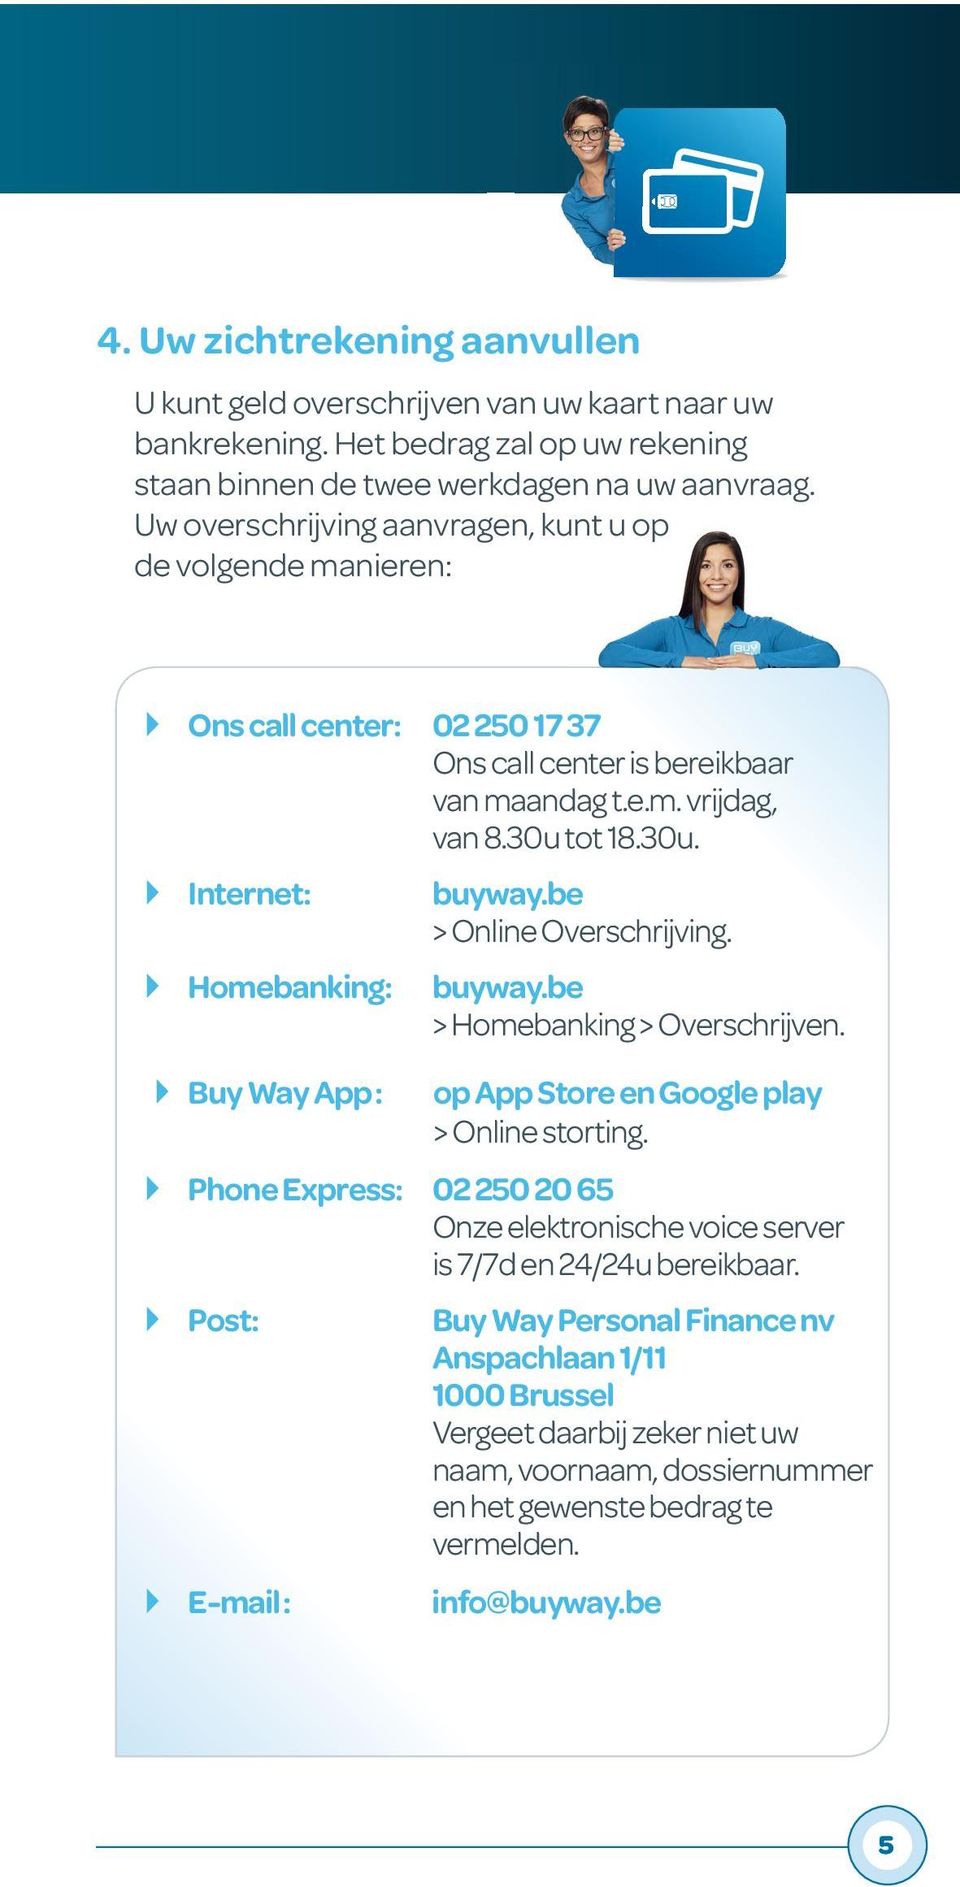 be > Online Overschrijving. } Homebanking: buyway.be > Homebanking > Overschrijven. } Buy Way App : op App Store en Google play > Online storting.